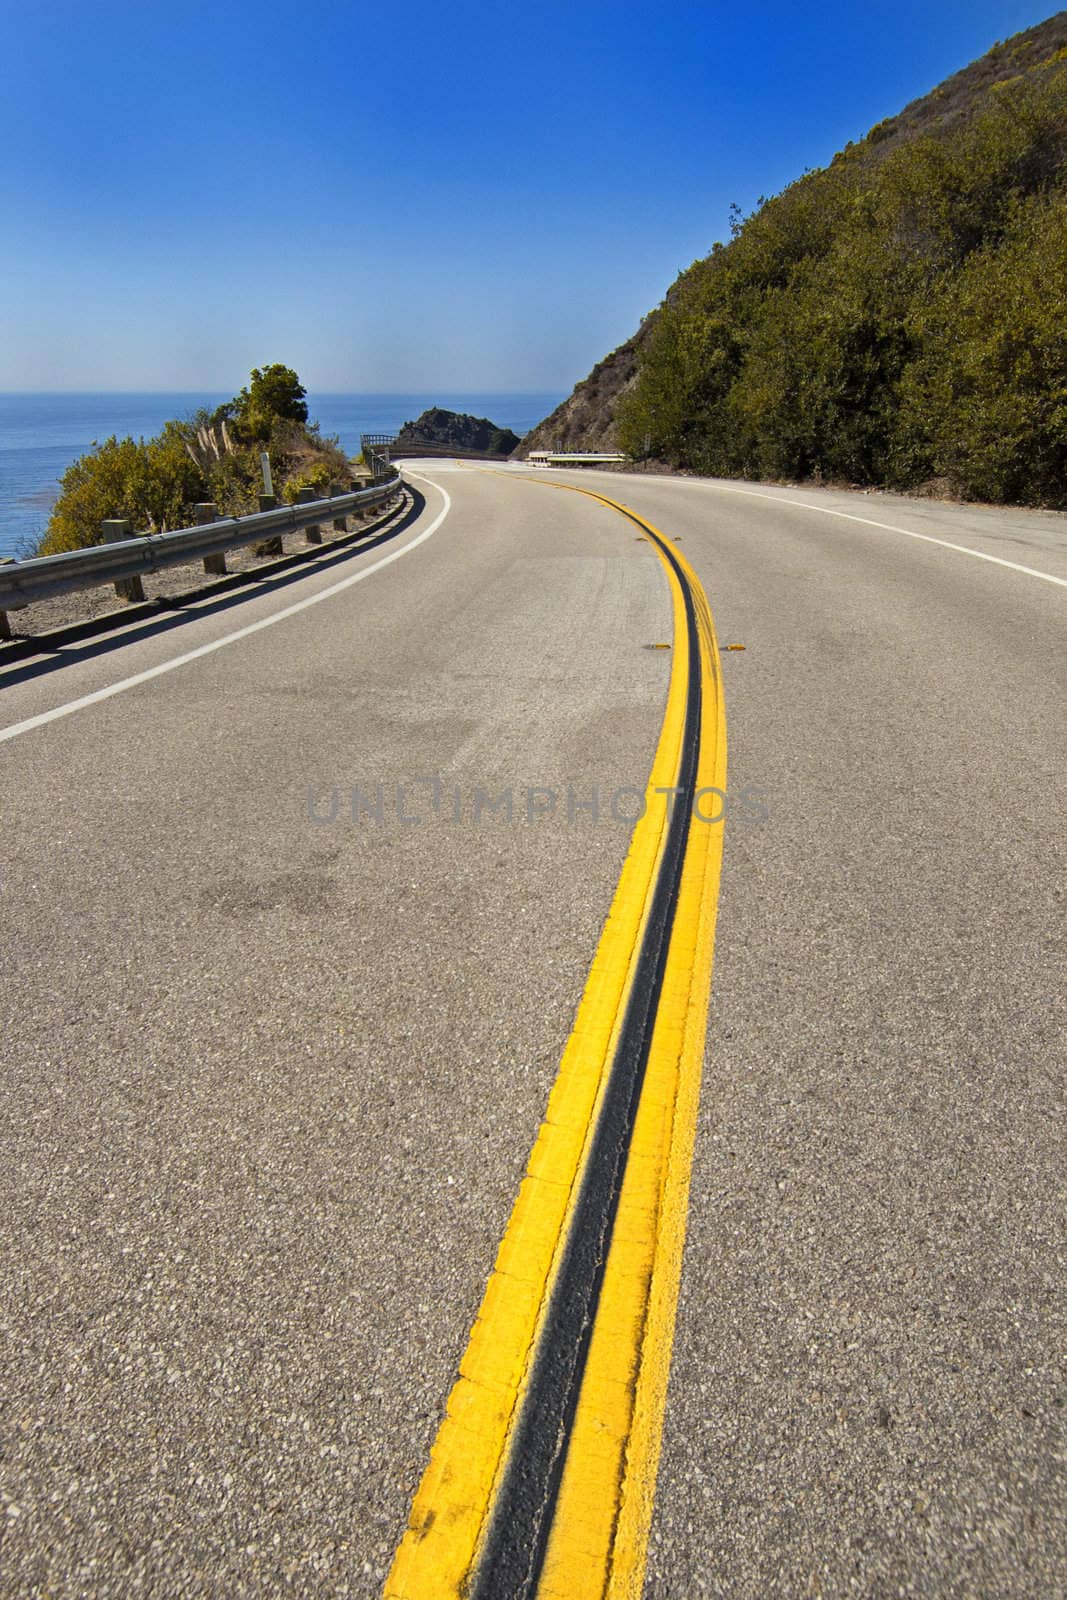 Pacific Coast Highway - Highway 1, California. The coastal highway between Los Angeles and San Francisco. 